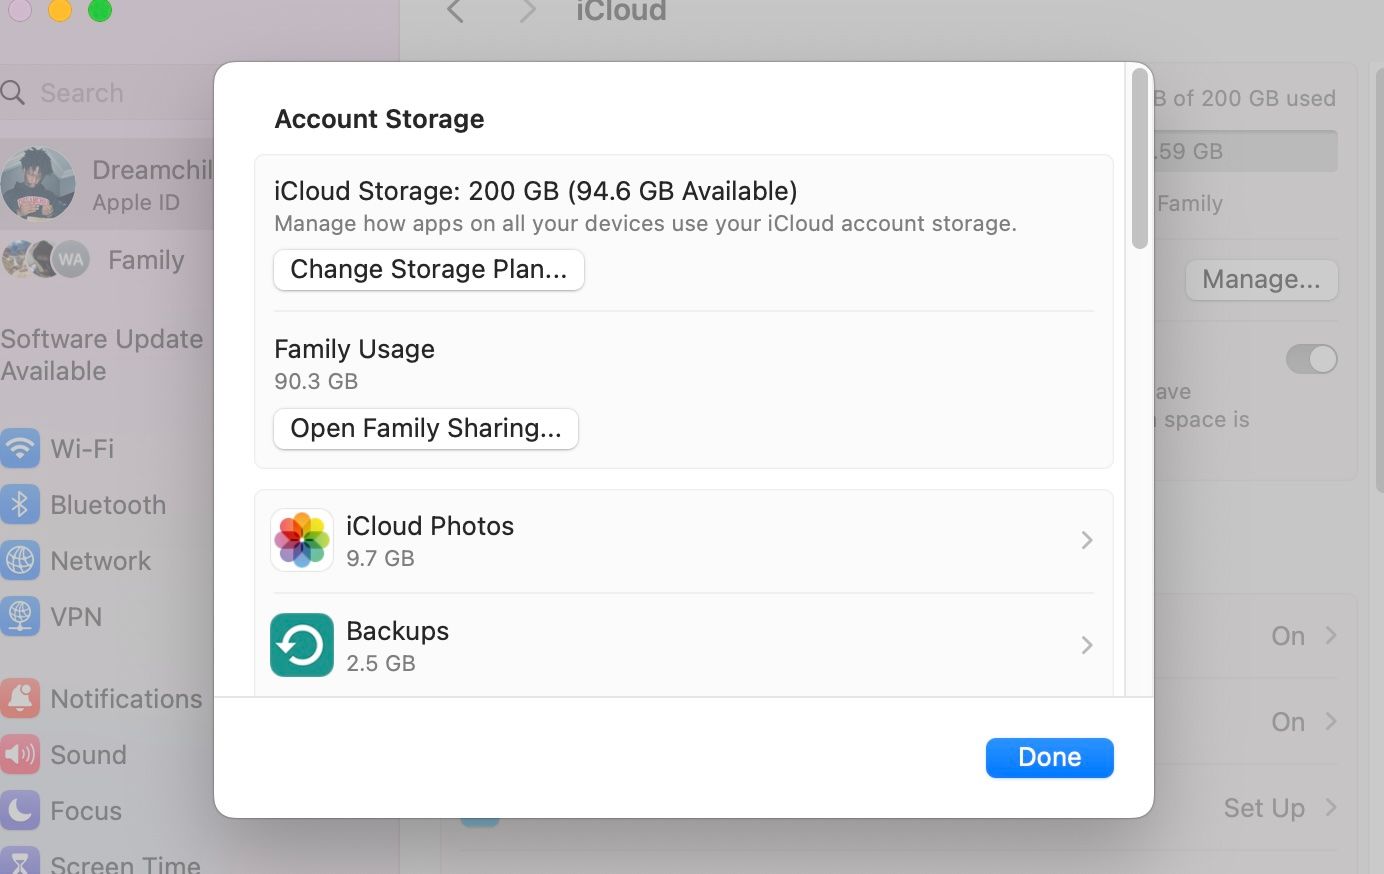 iCloud Account Storage managemet pop-up window on macOS